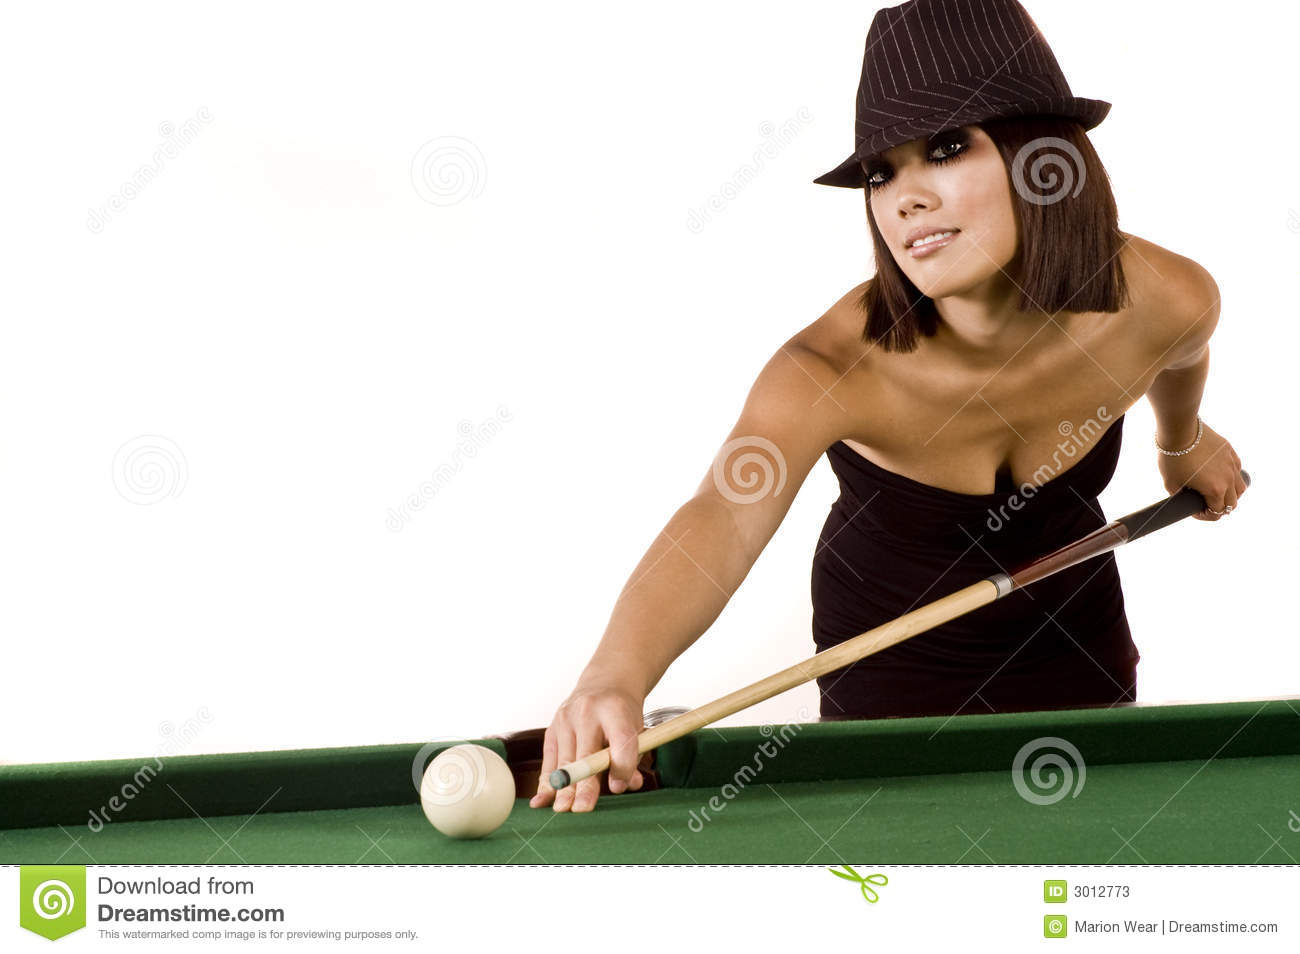 Sexy Pool Player Stock Photos   Image  3012773